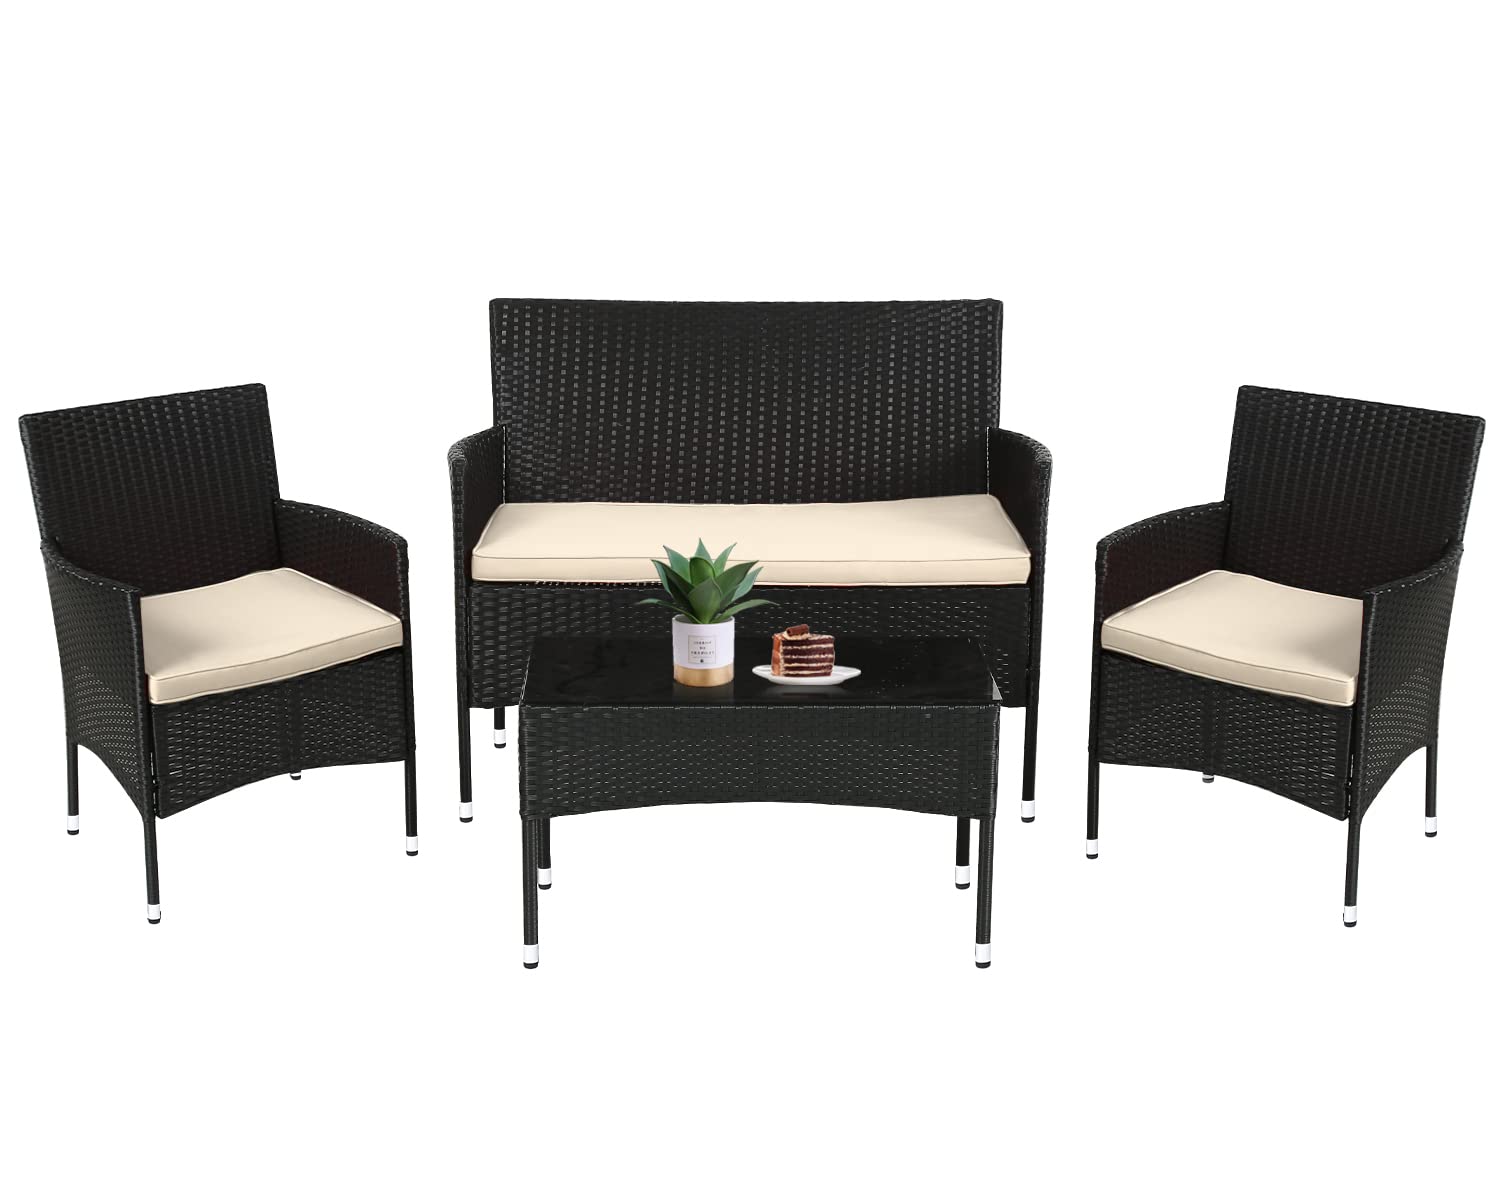 Patio Furniture Set 4 Pieces Outdoor Rattan Chair Wicker Sofa Garden Conversation